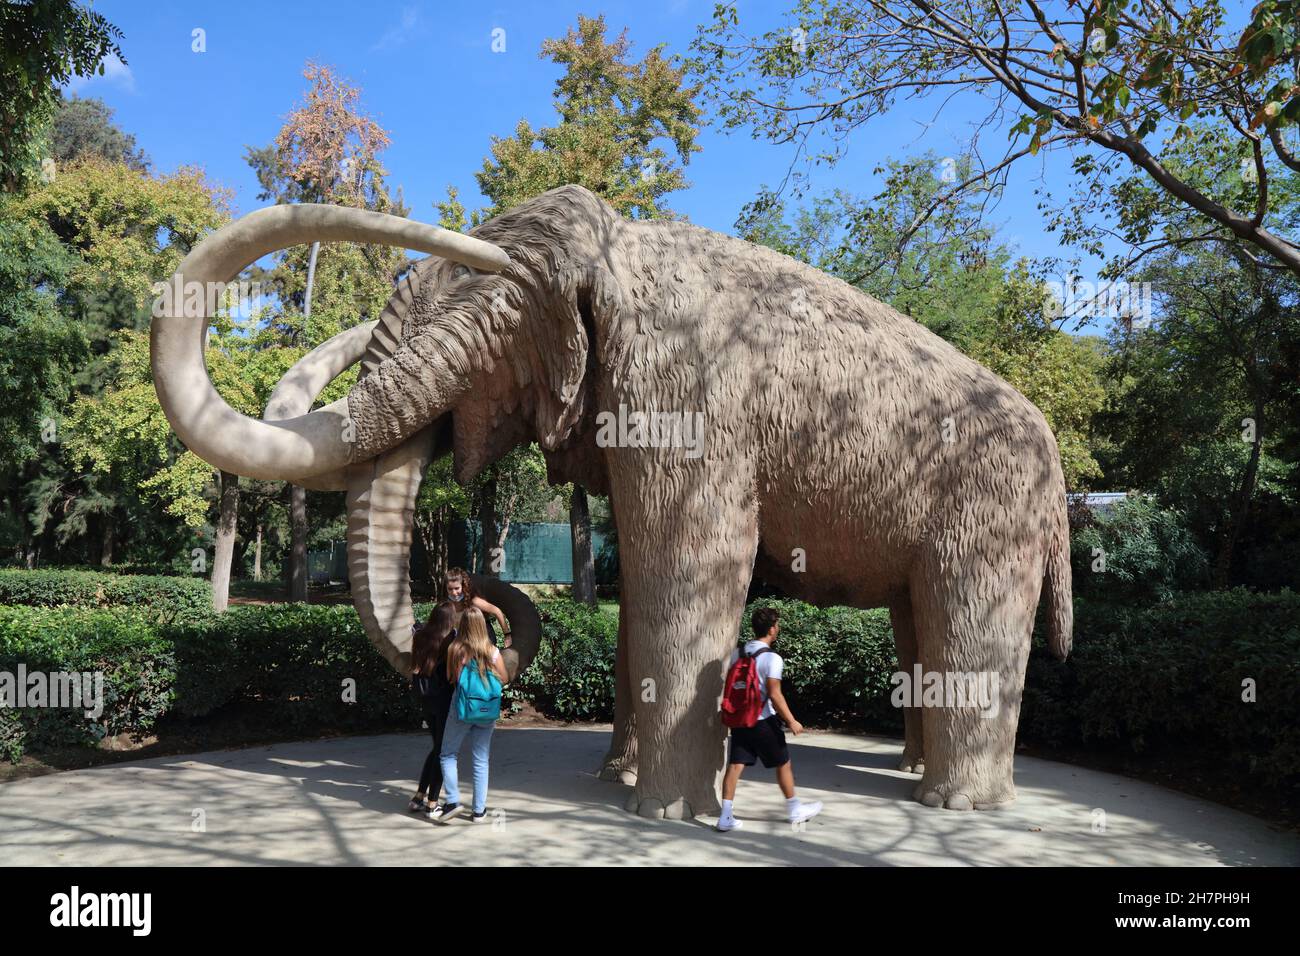 BARCELONA, SPAIN - OCTOBER 7, 2021: People visit the mammoth statue in Parc de la Ciutadella in Barcelona, Spain. Stock Photo